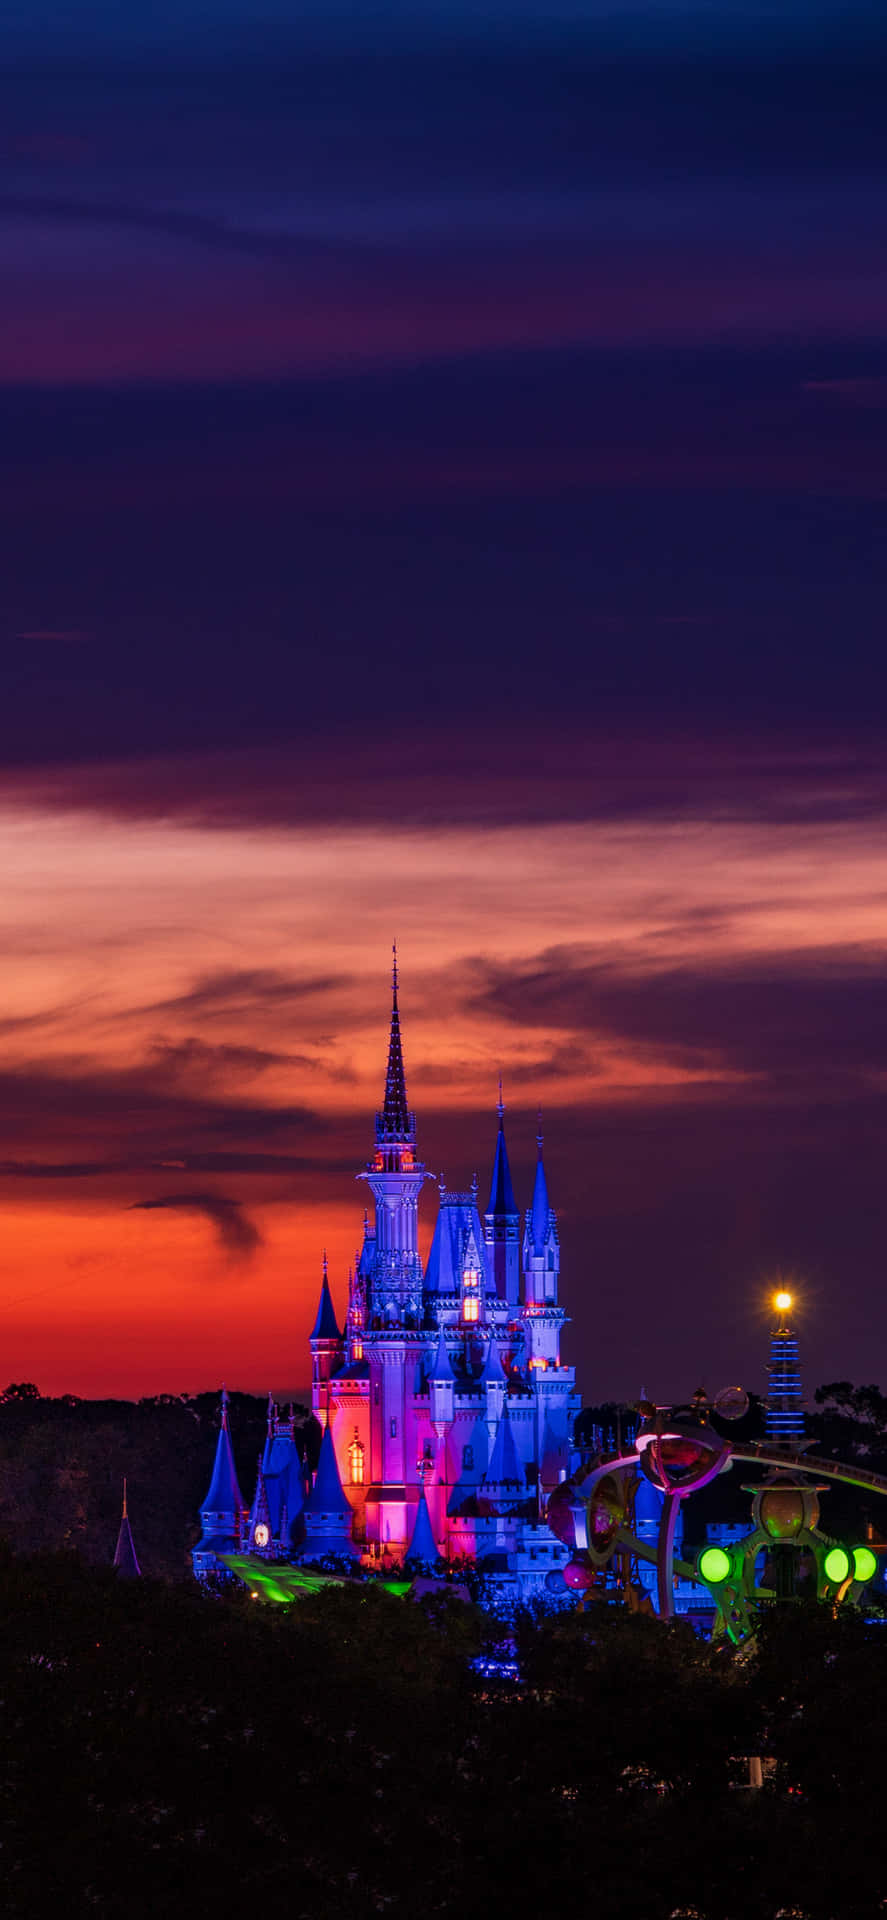 Iphone 7 Disney Castle Sunset Park Wallpaper